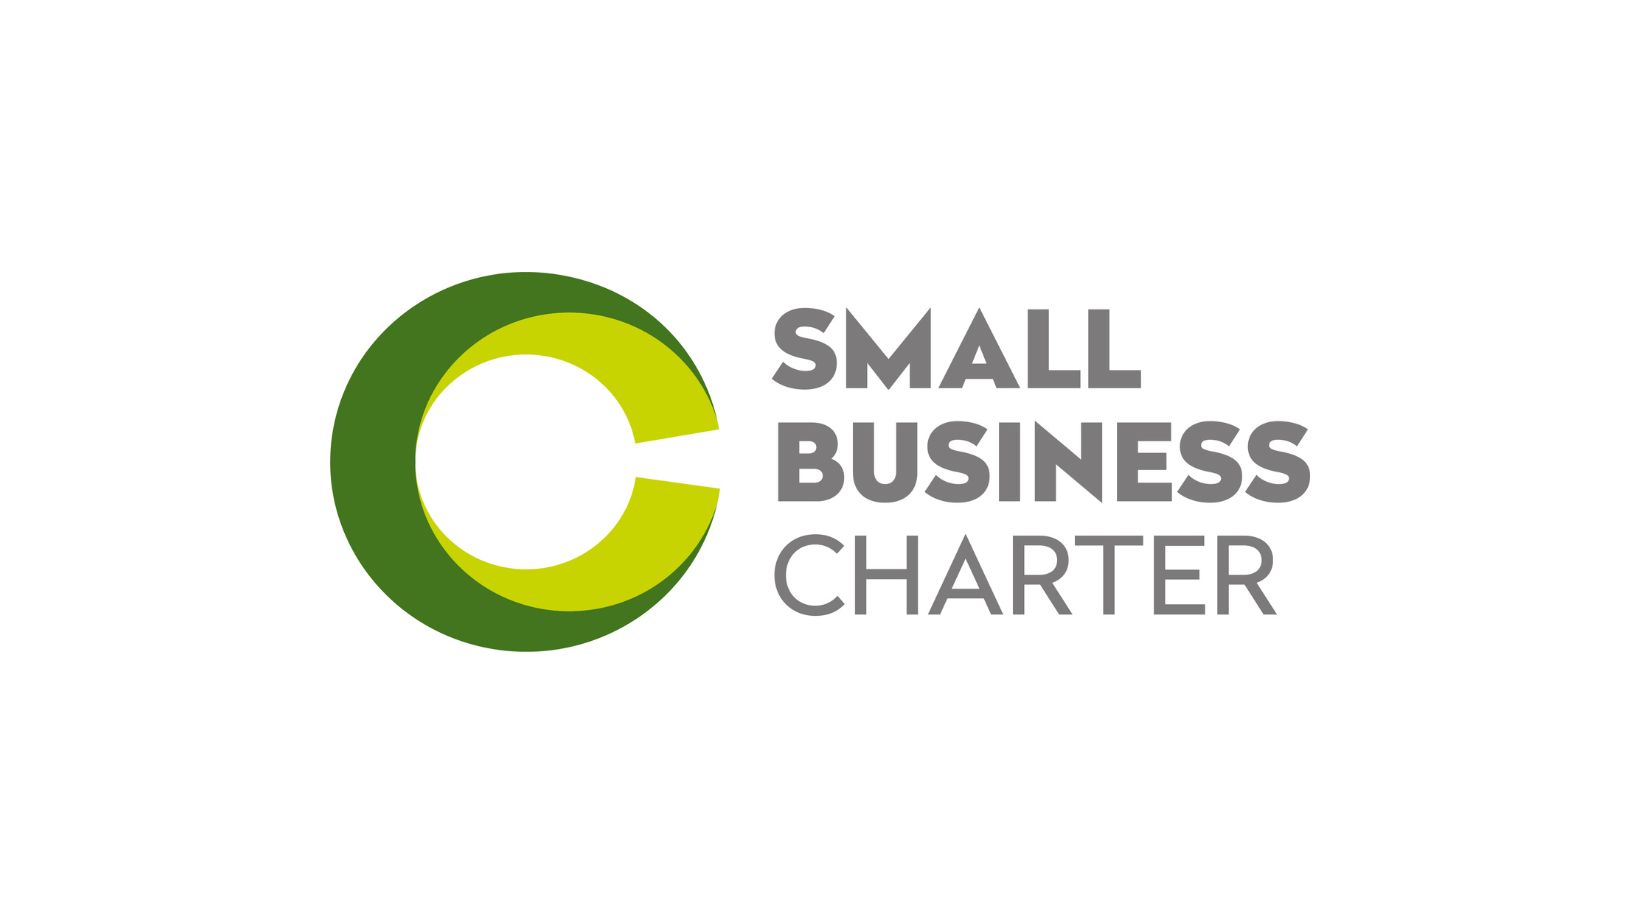 Small Business Charter Accreditation